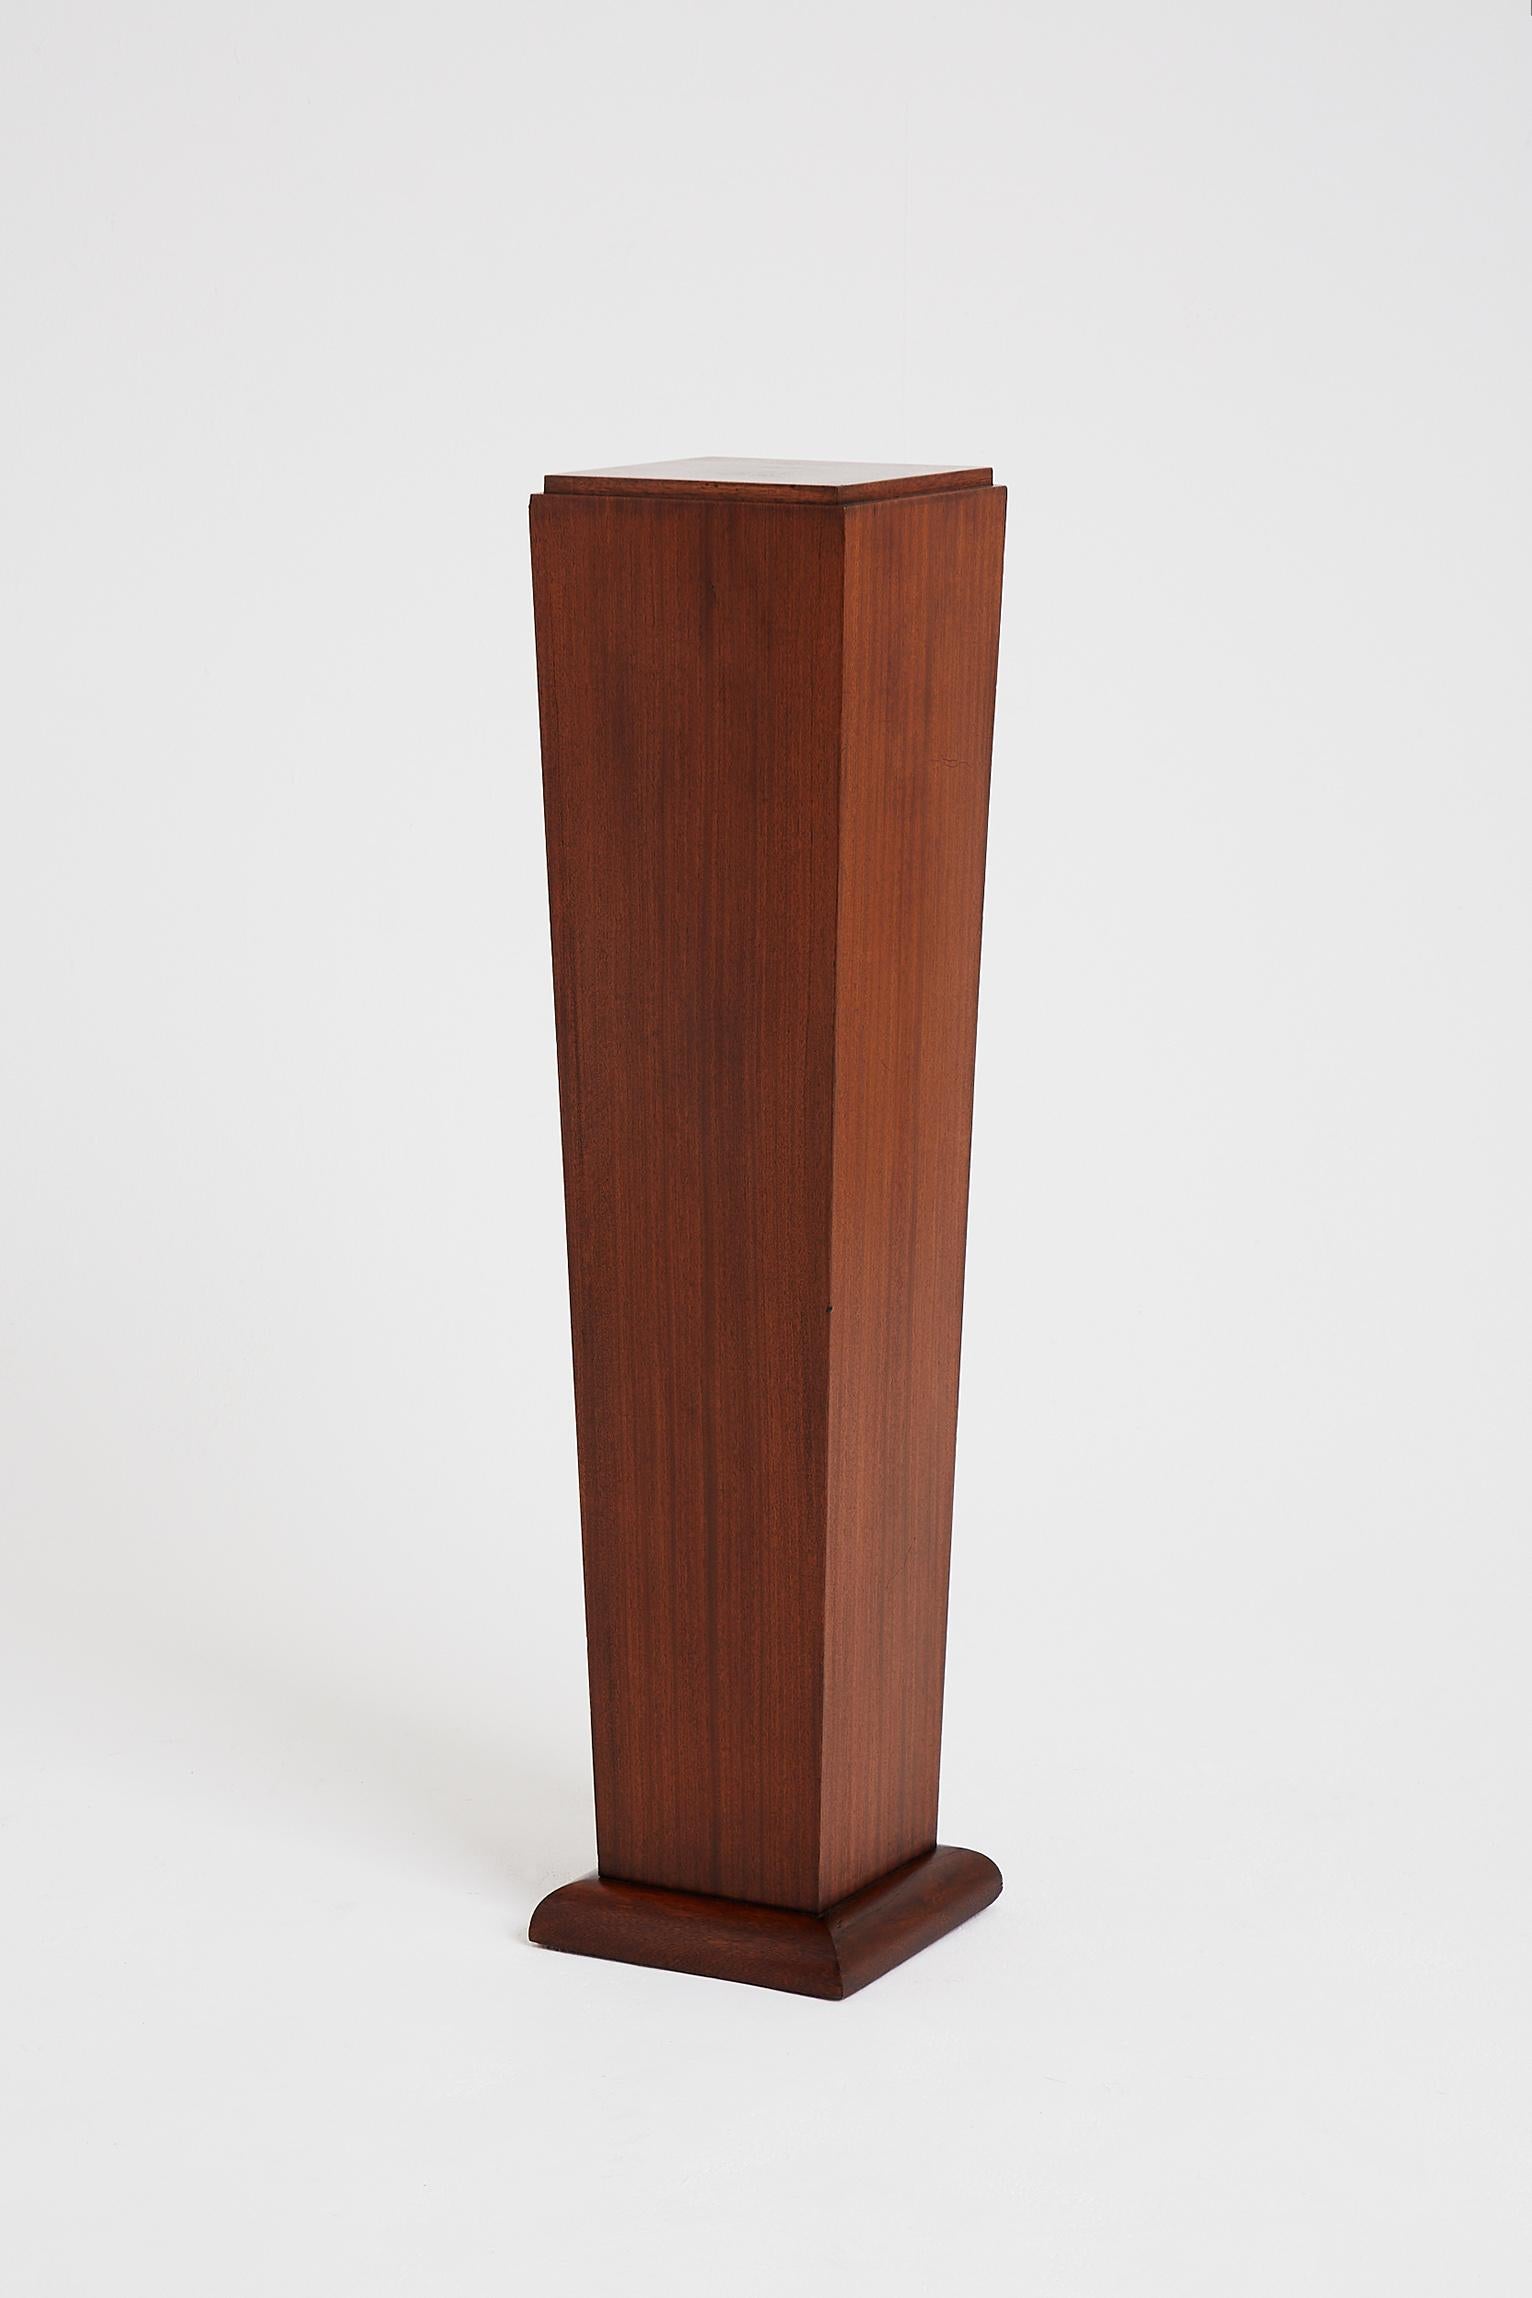 20th Century Art Deco Mahogany Pedestal